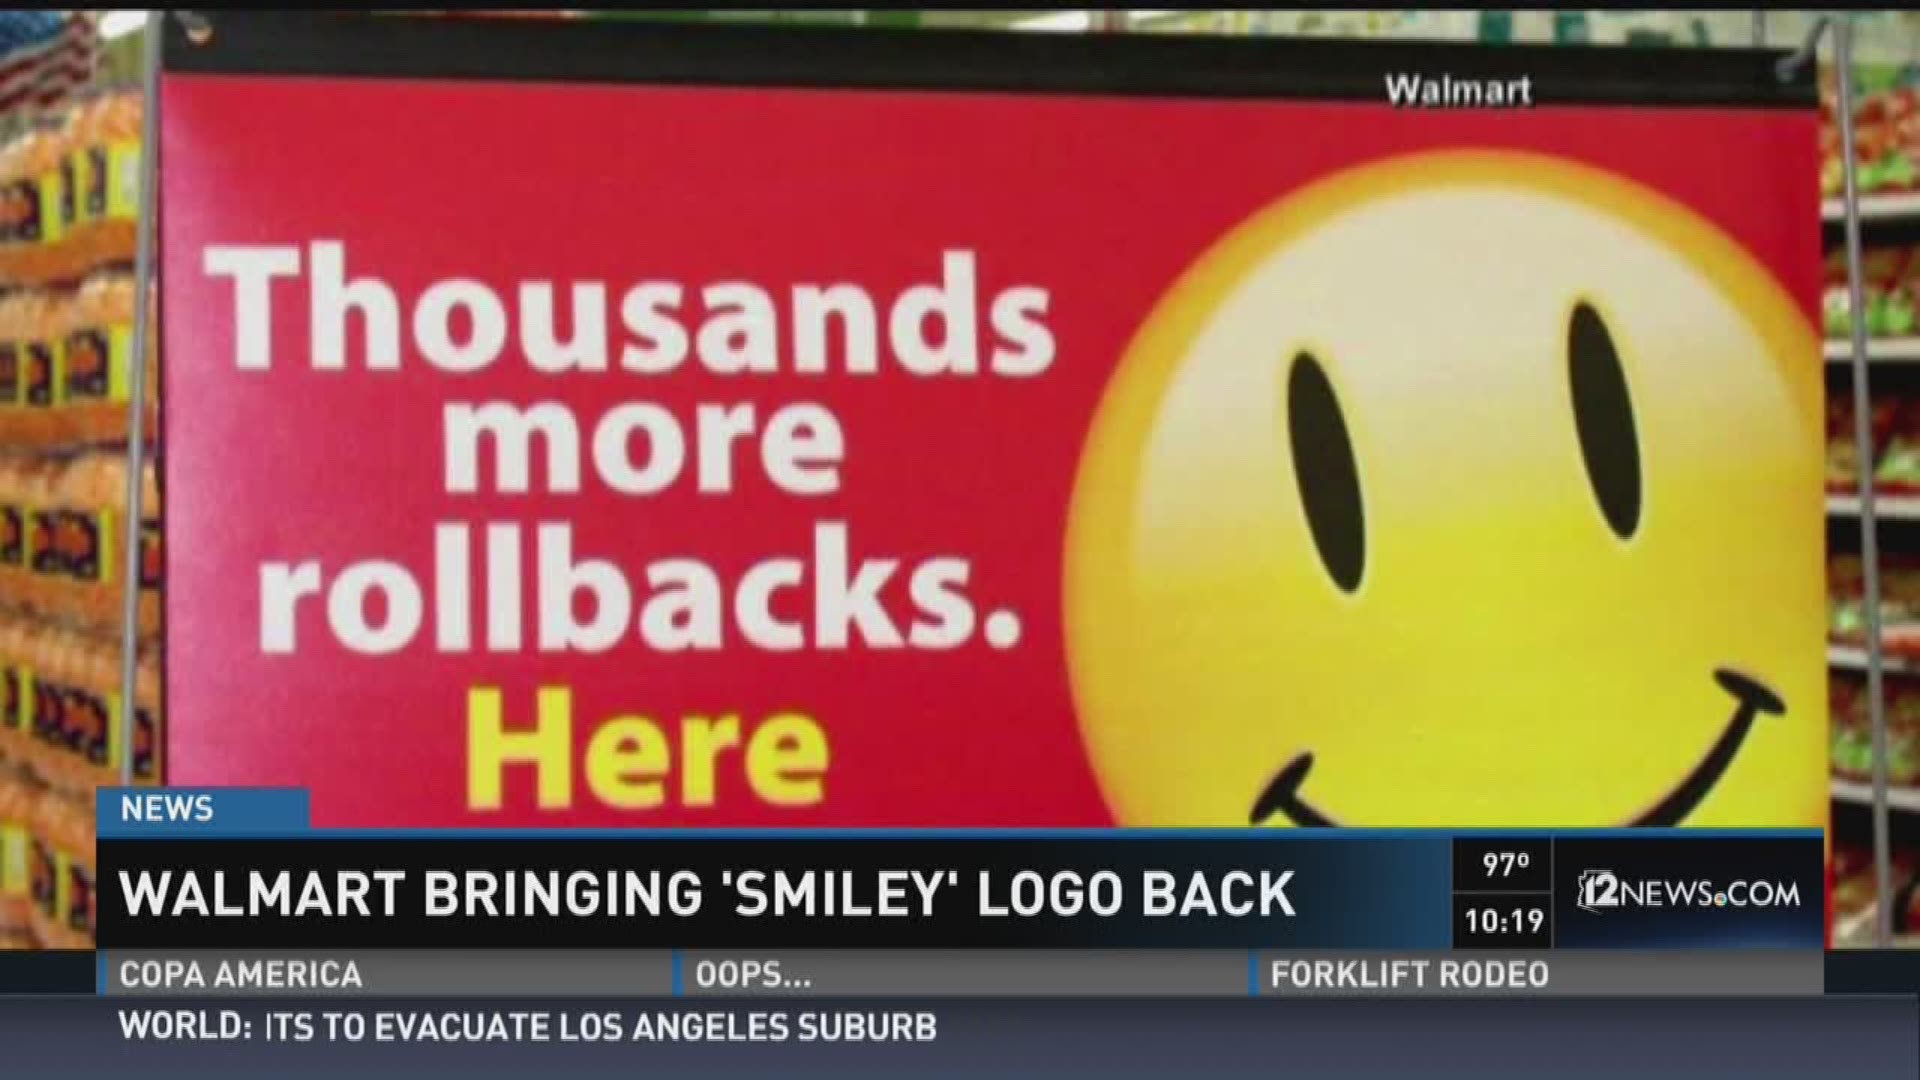 Walmart bringing back 'Smiley' logo